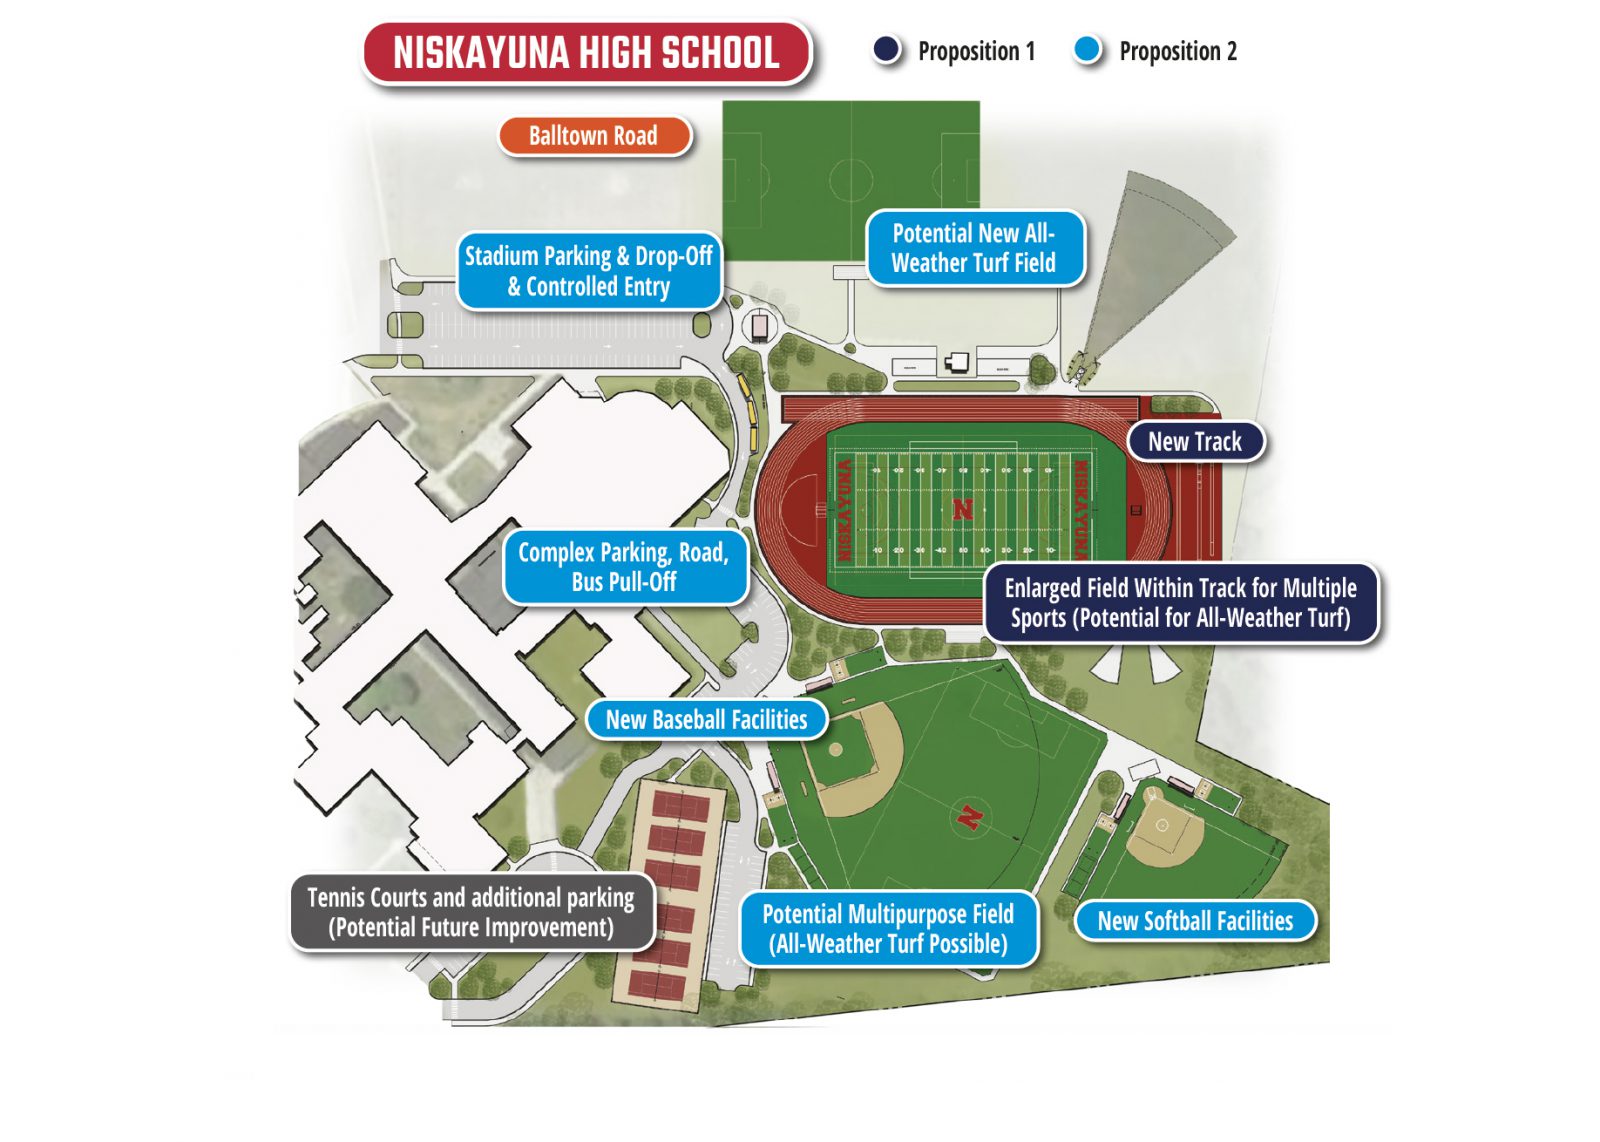 Niskayuna High School site plan with proposed improvements